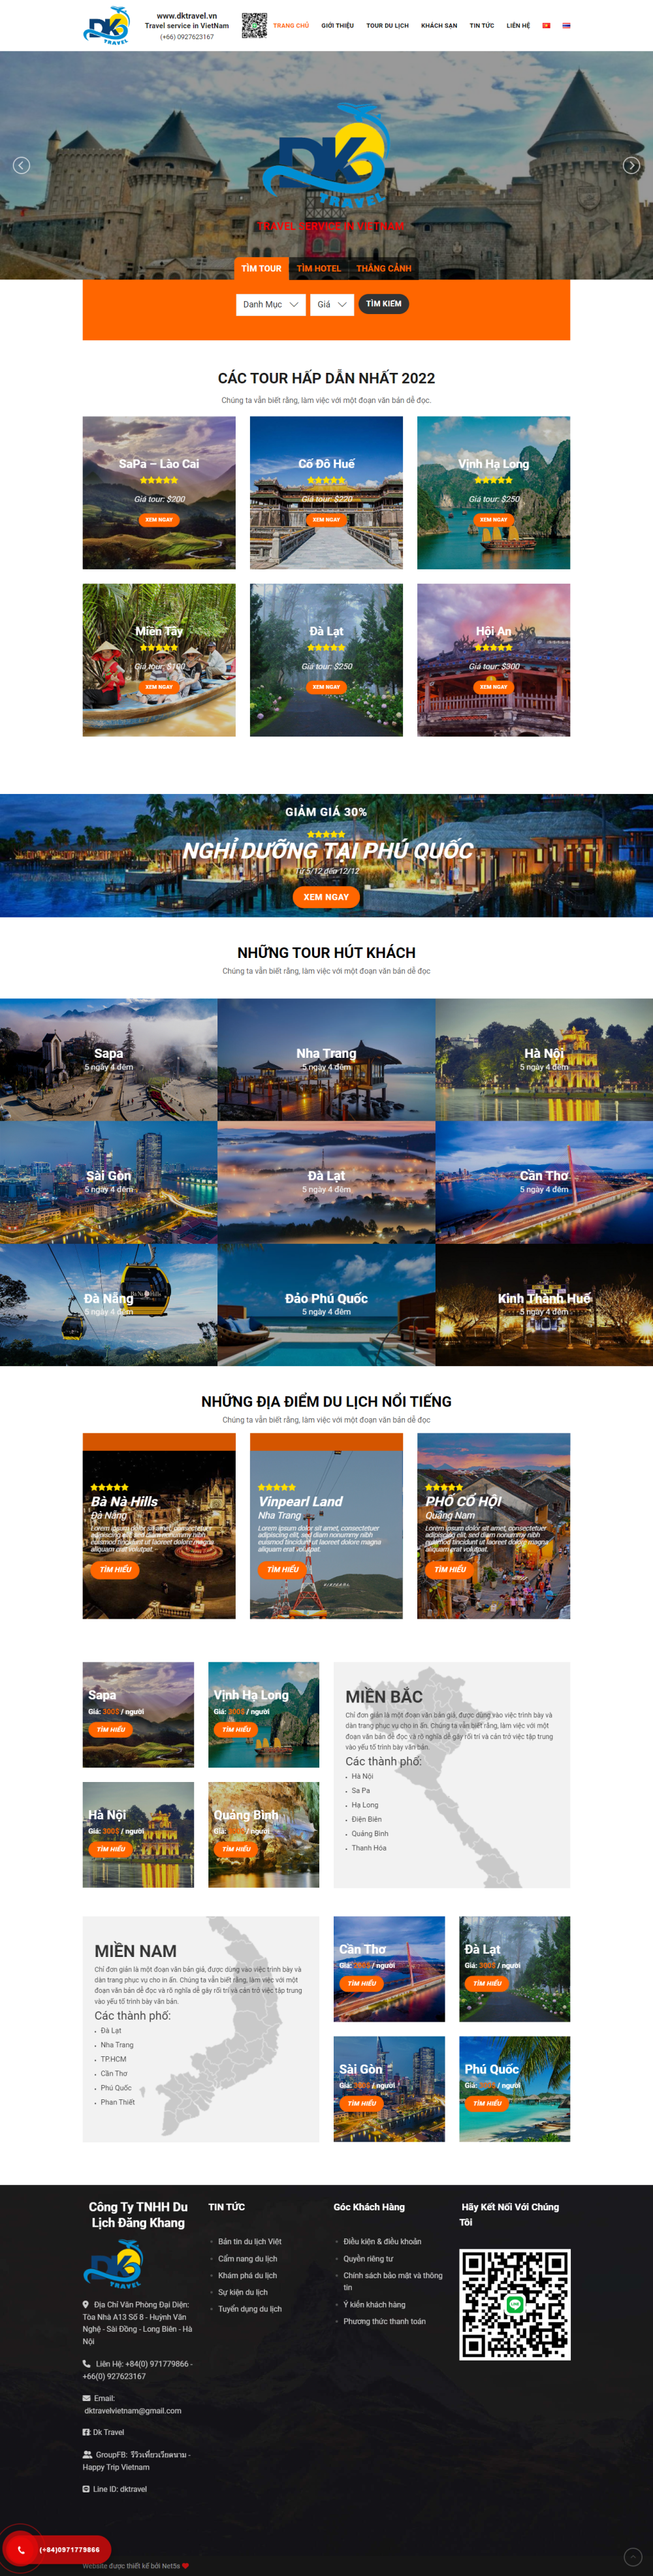 mẫu website du lịch